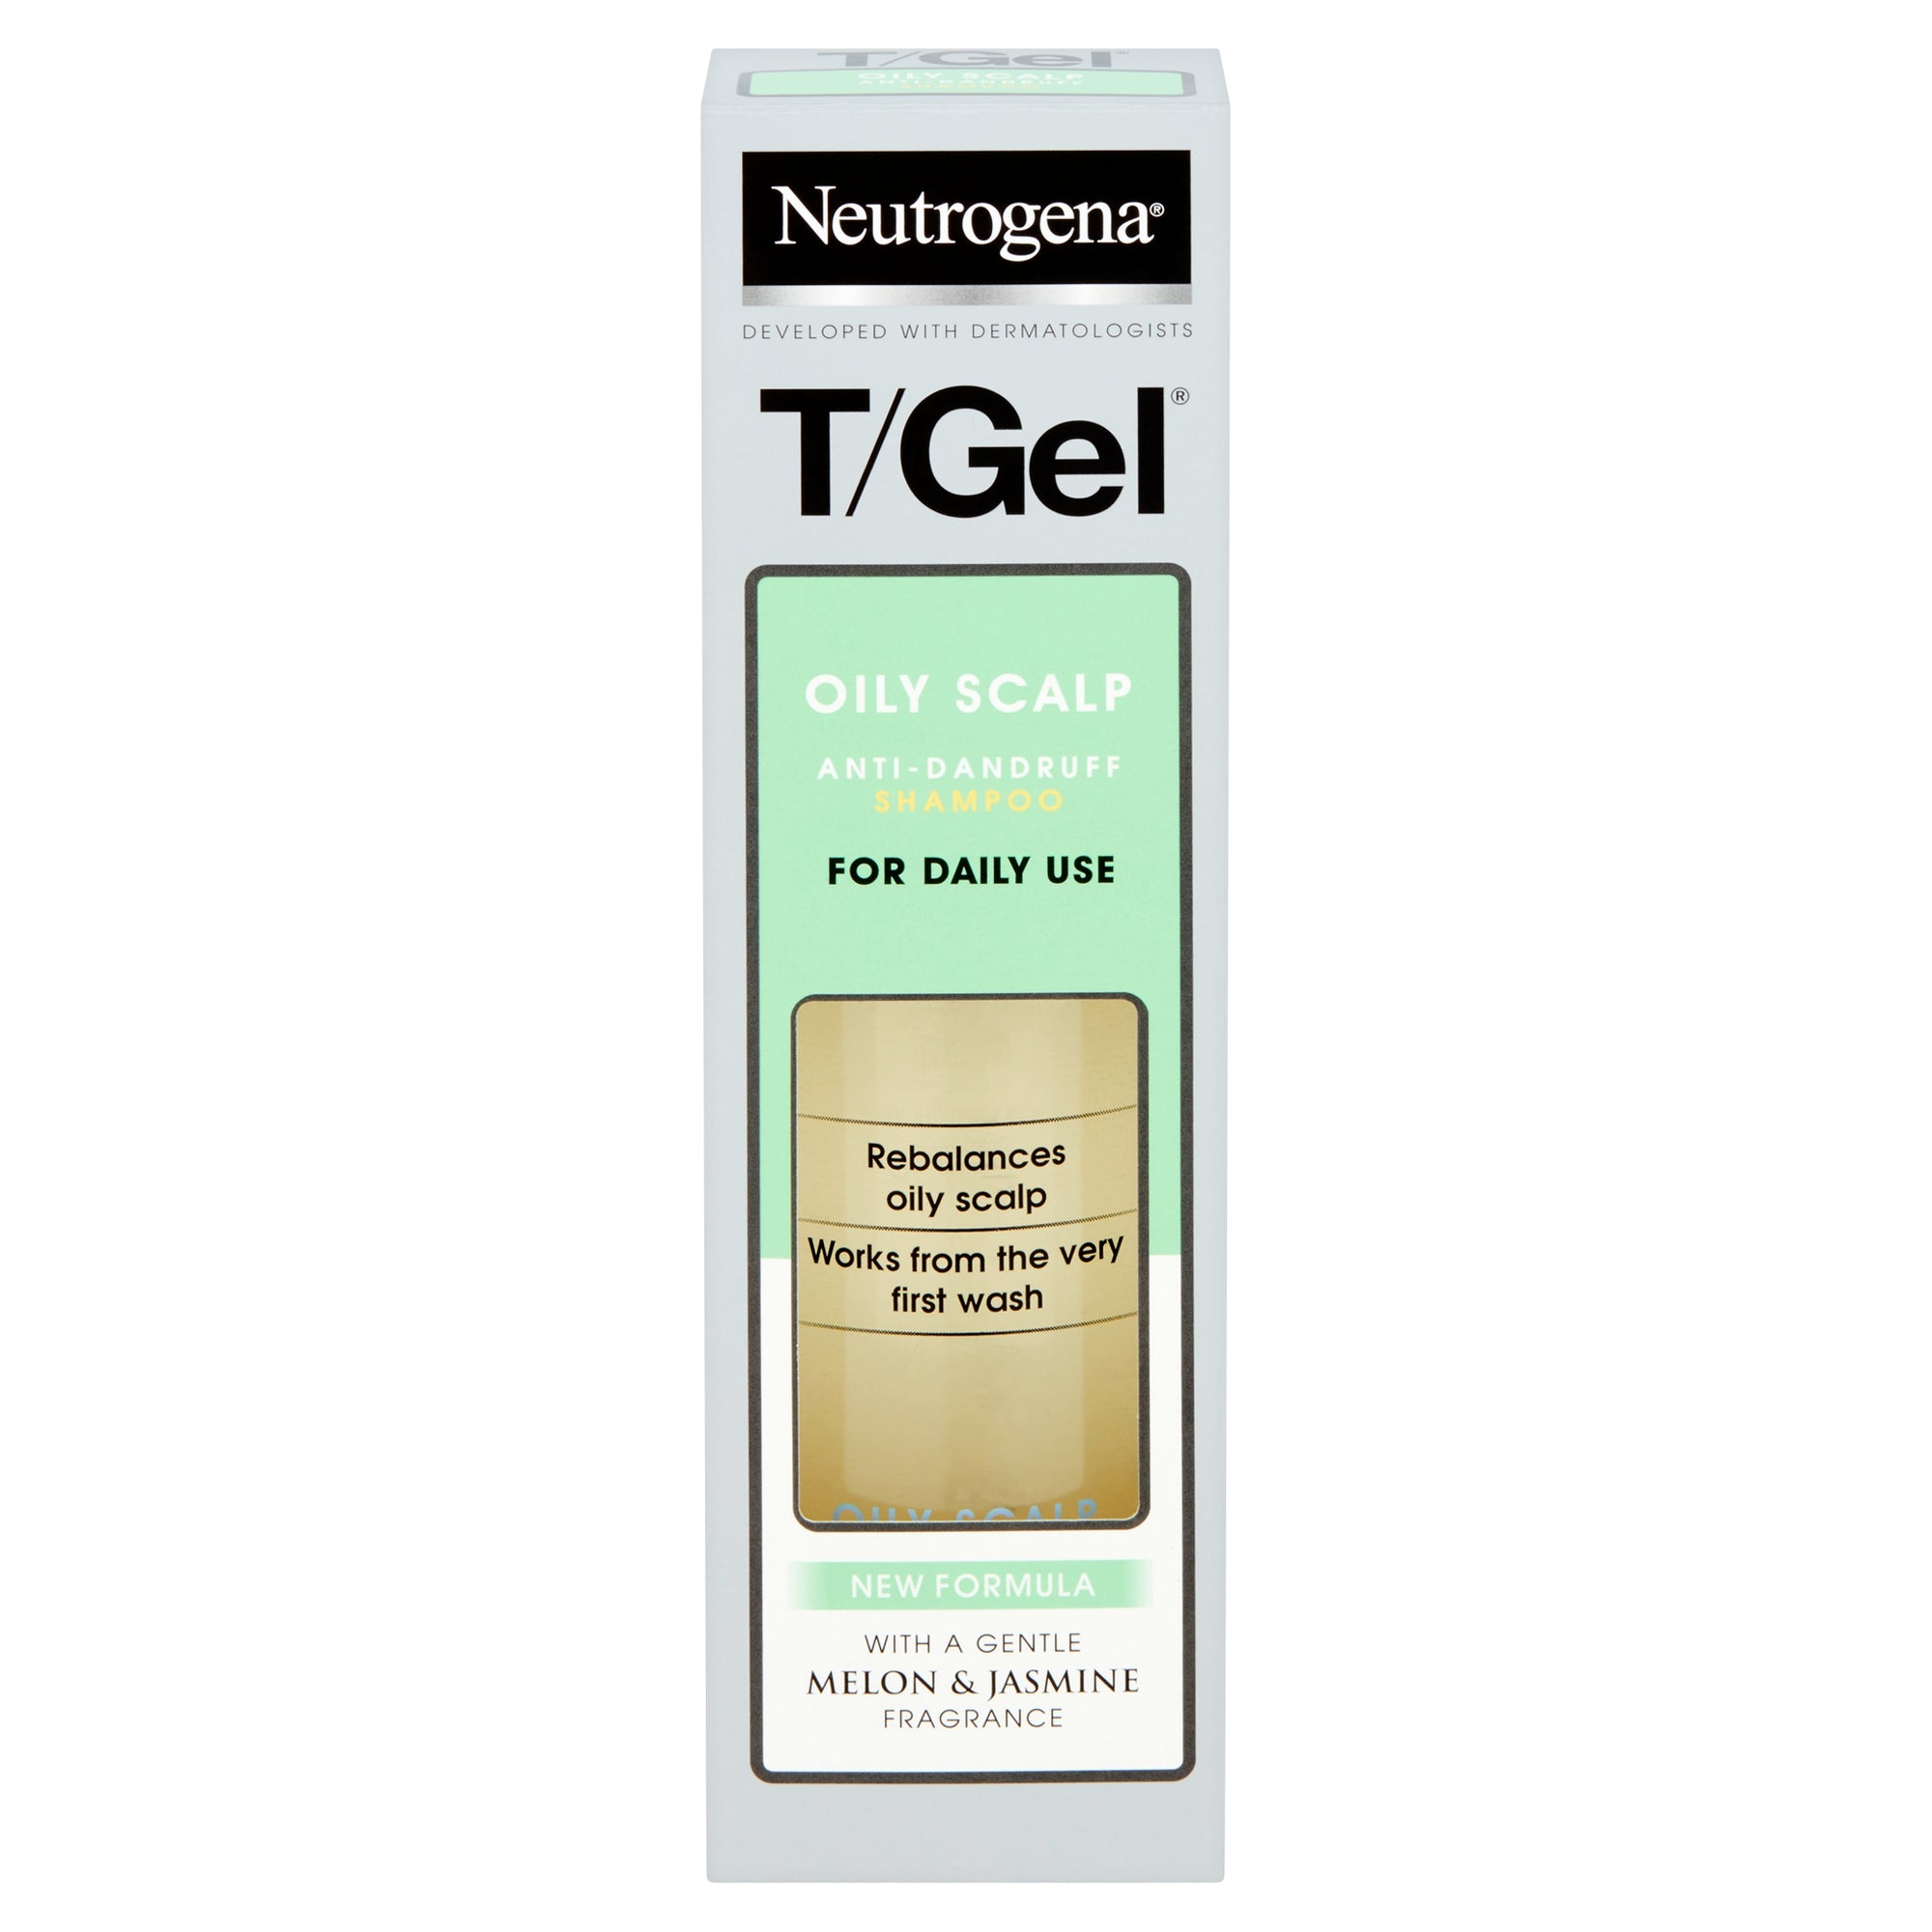 T/Gel Oily Scalp Anti-Dandruff Shampoo